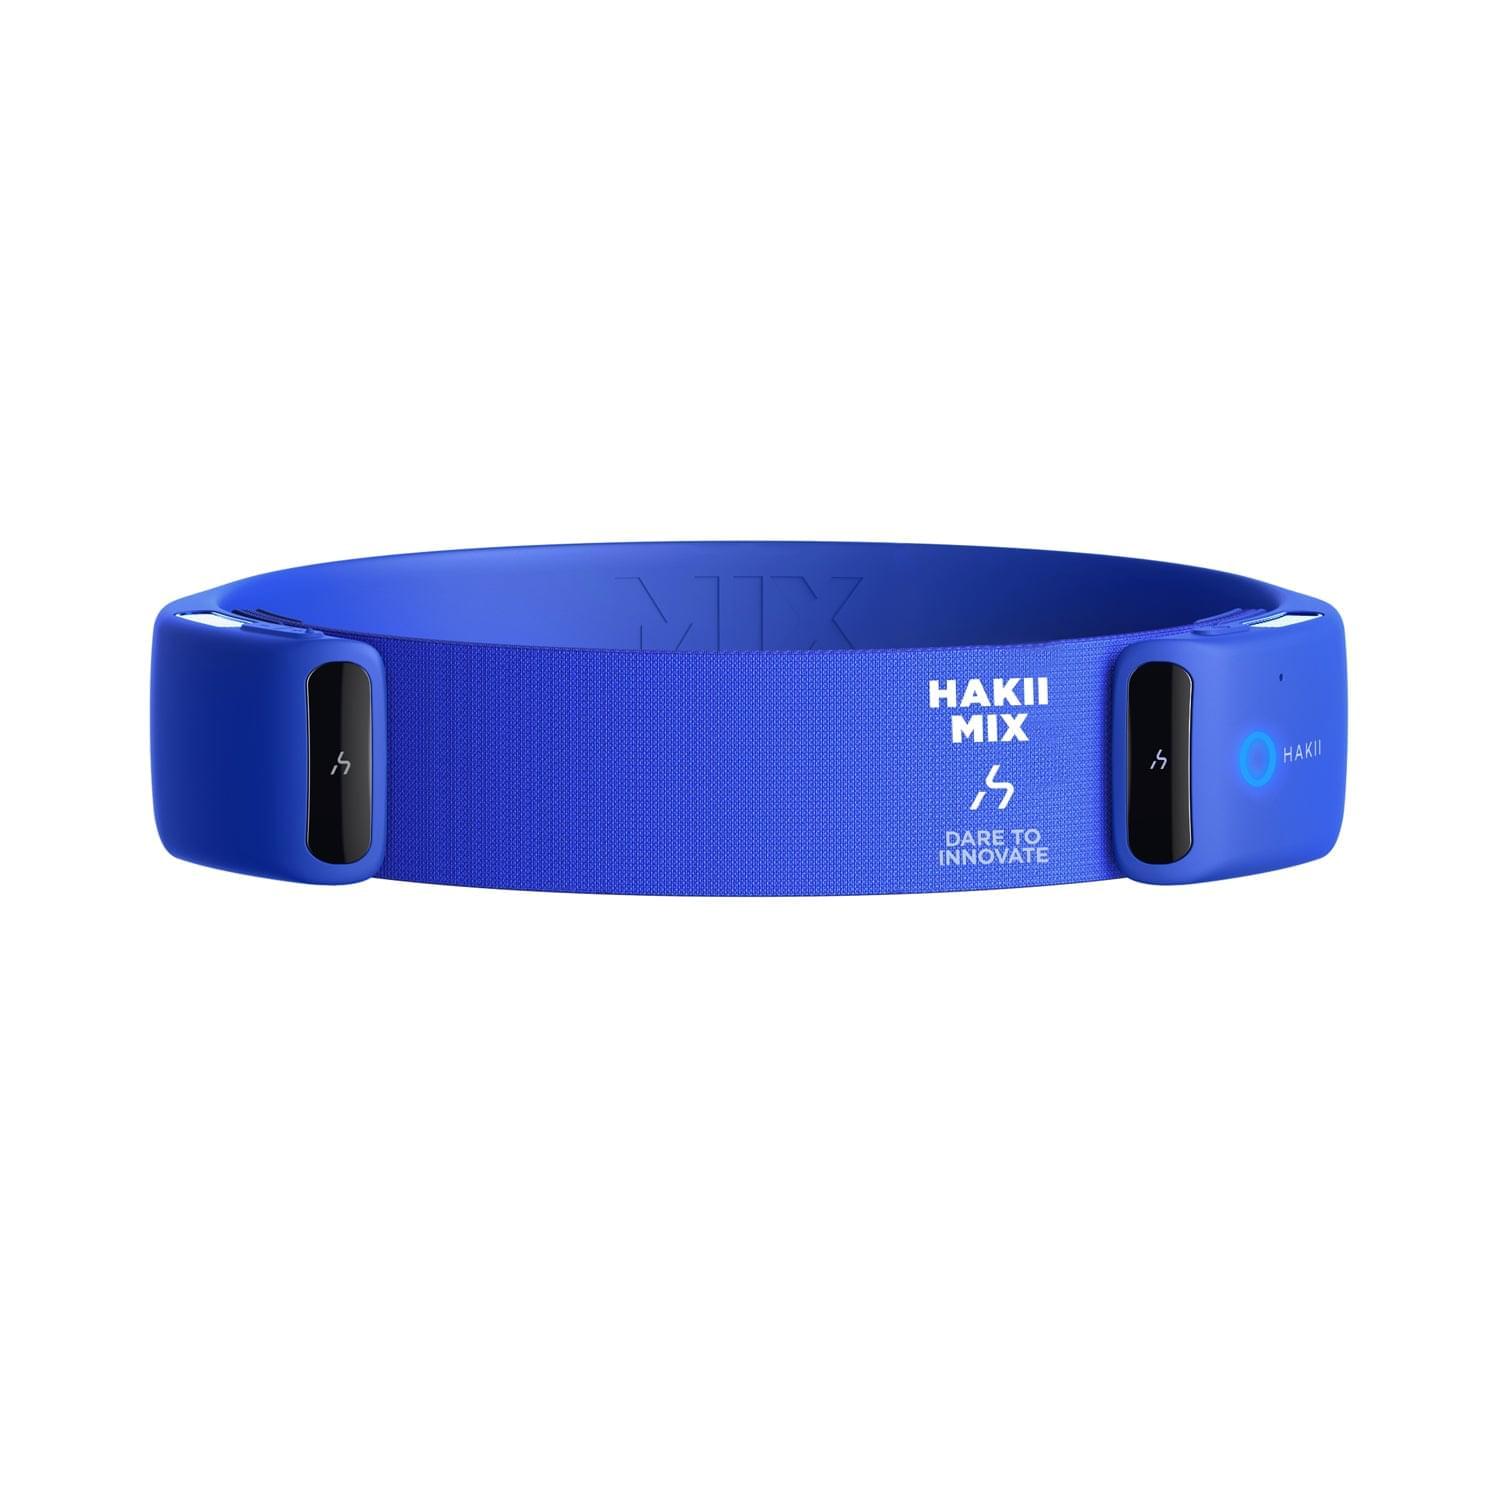 HAKII Mix Smart Headband Headphones for Sports (Blue)